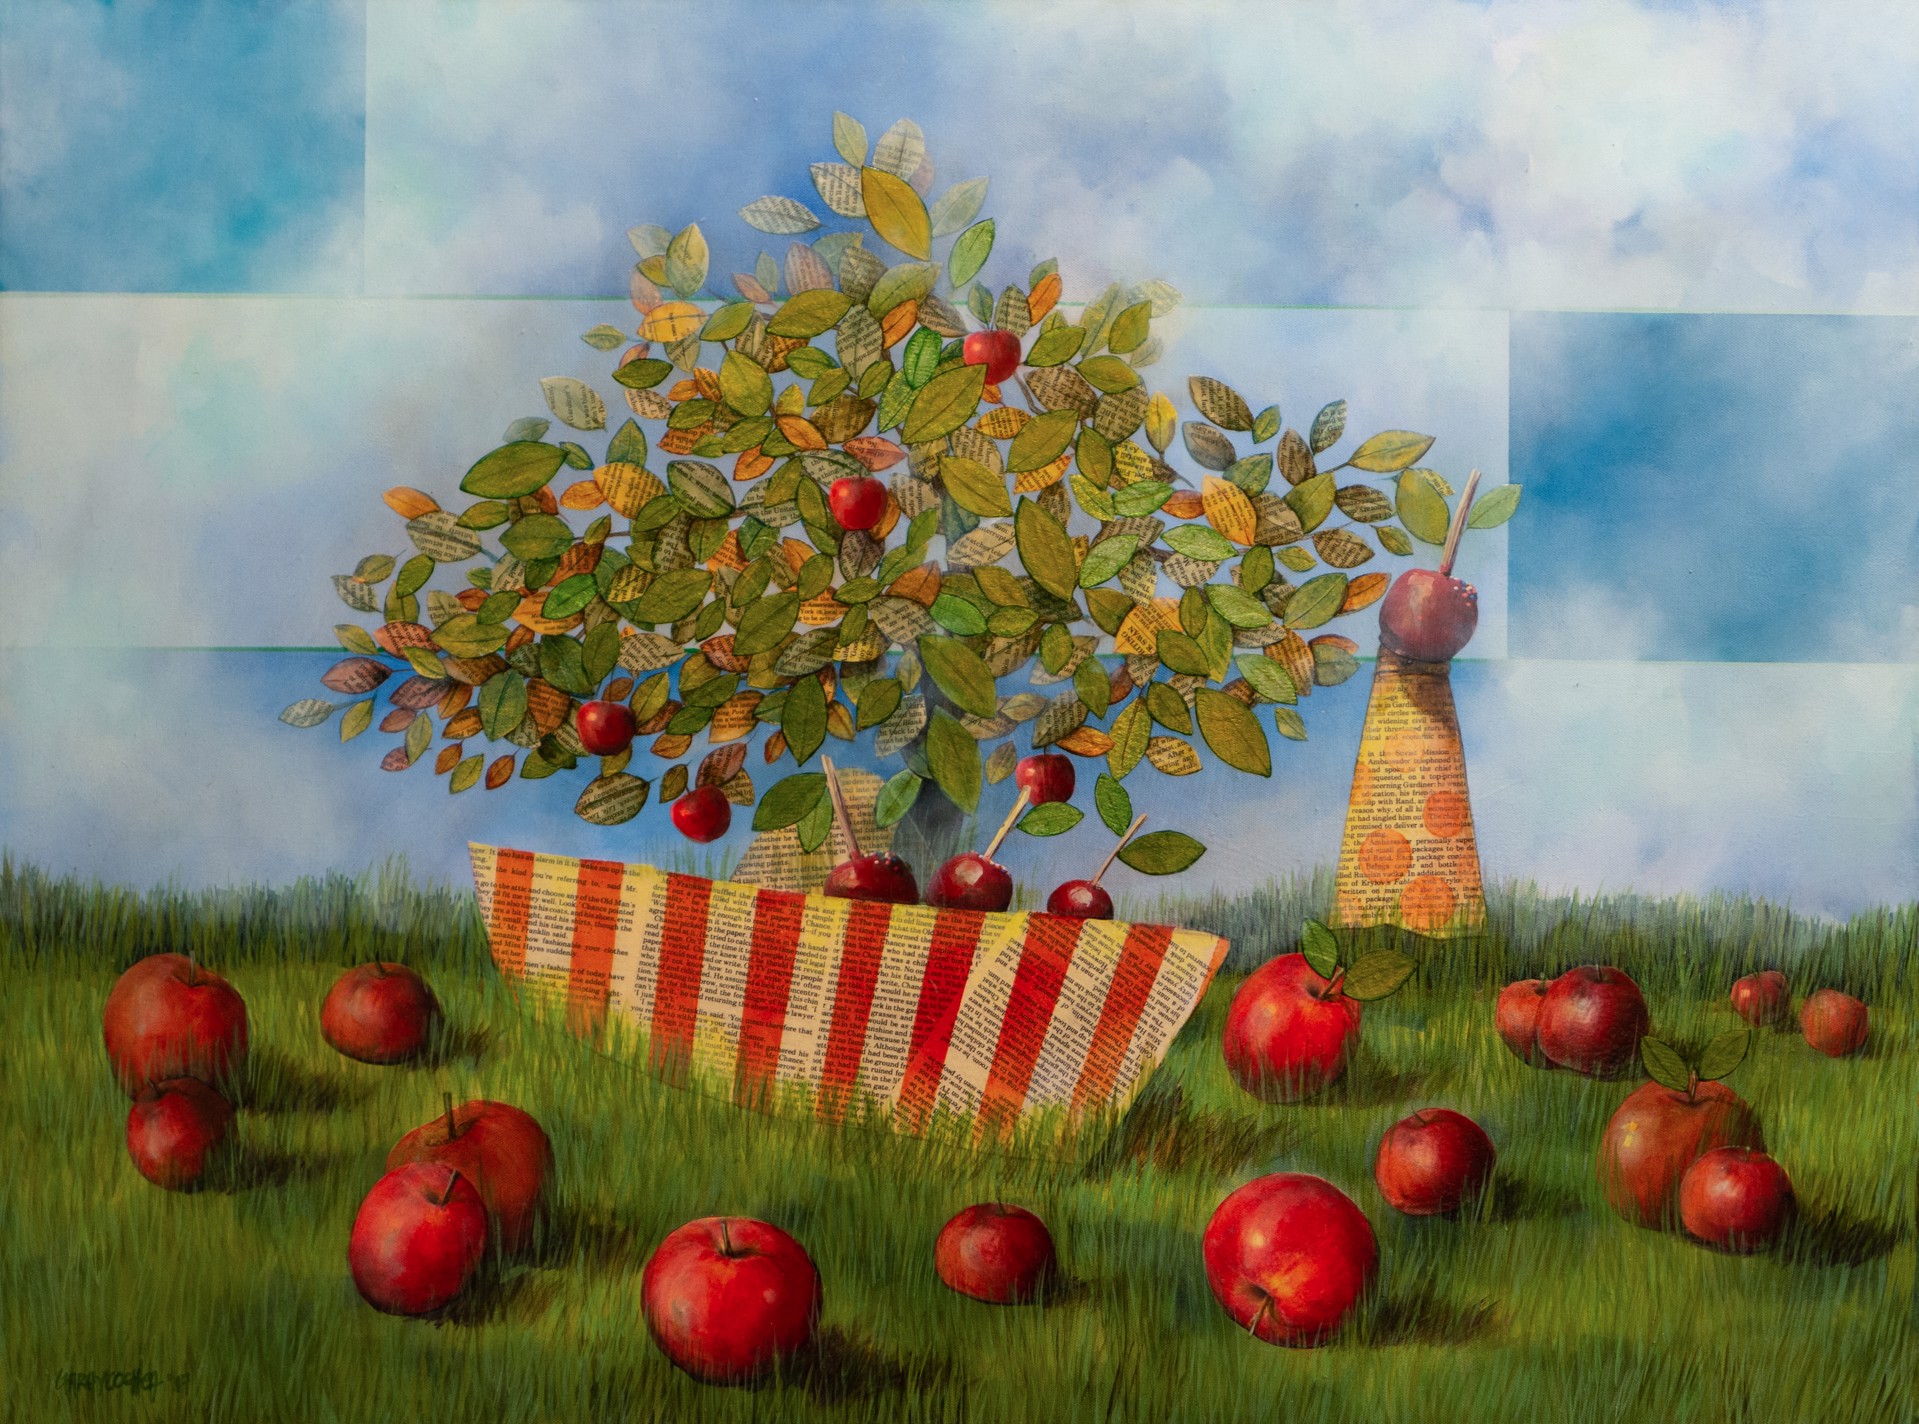 Candy Apples Field by Guido Garaycochea